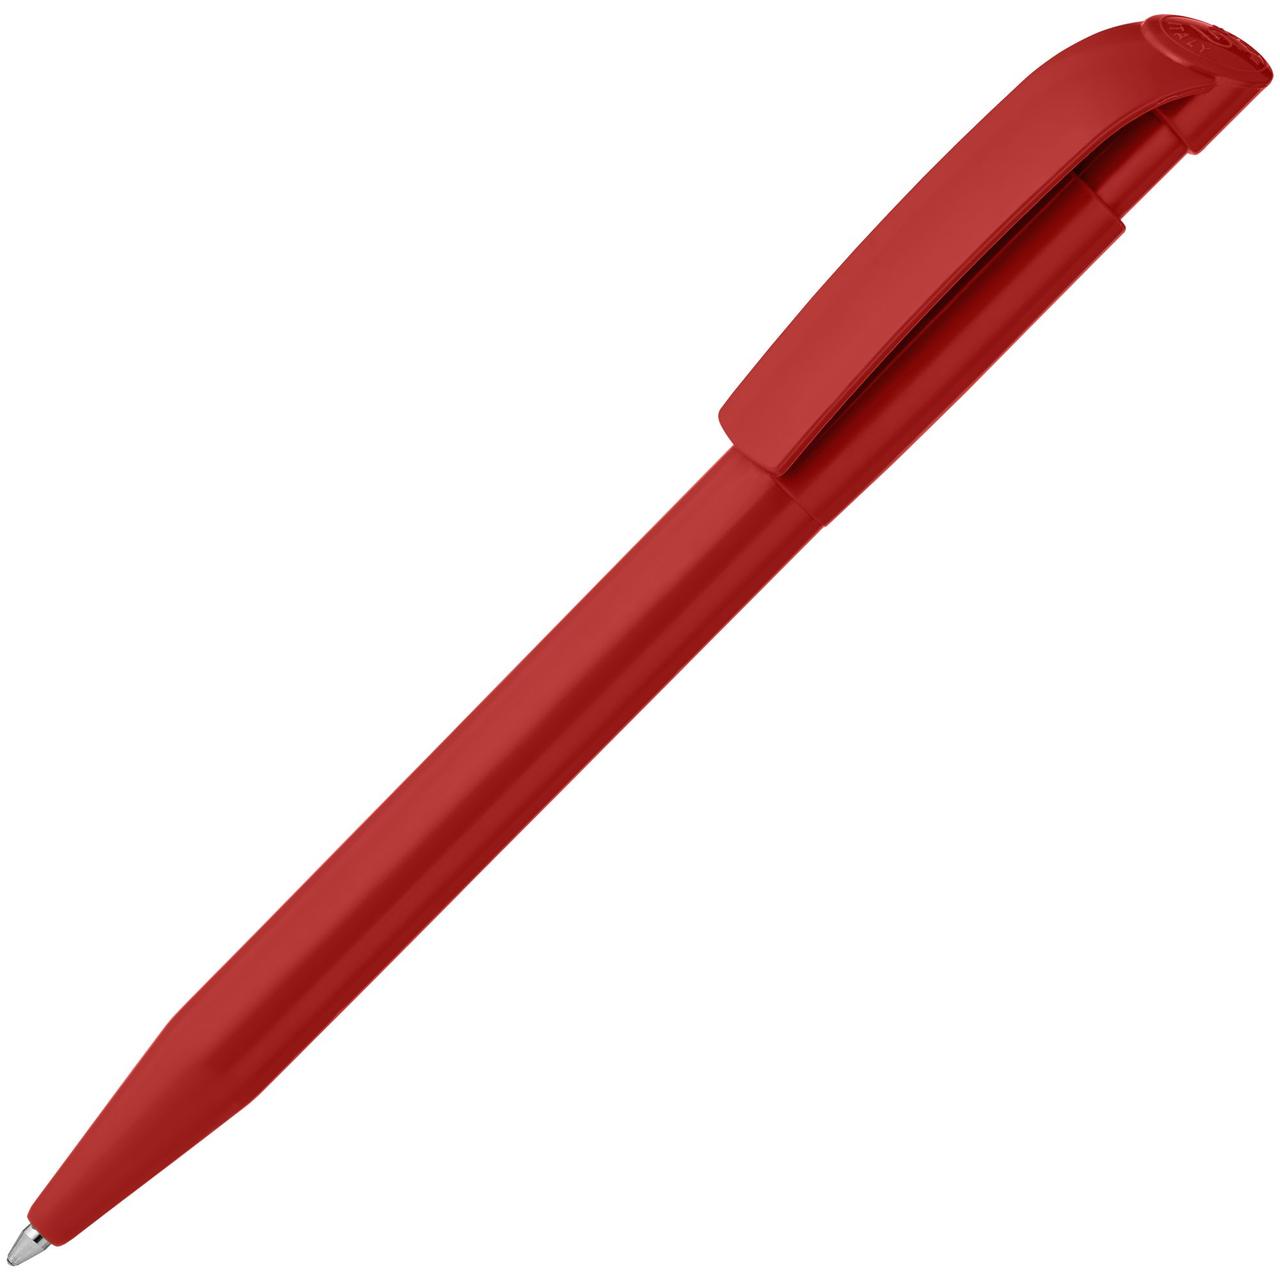 Ручка шариковая S45 Total, красная (артикул 11445.50)